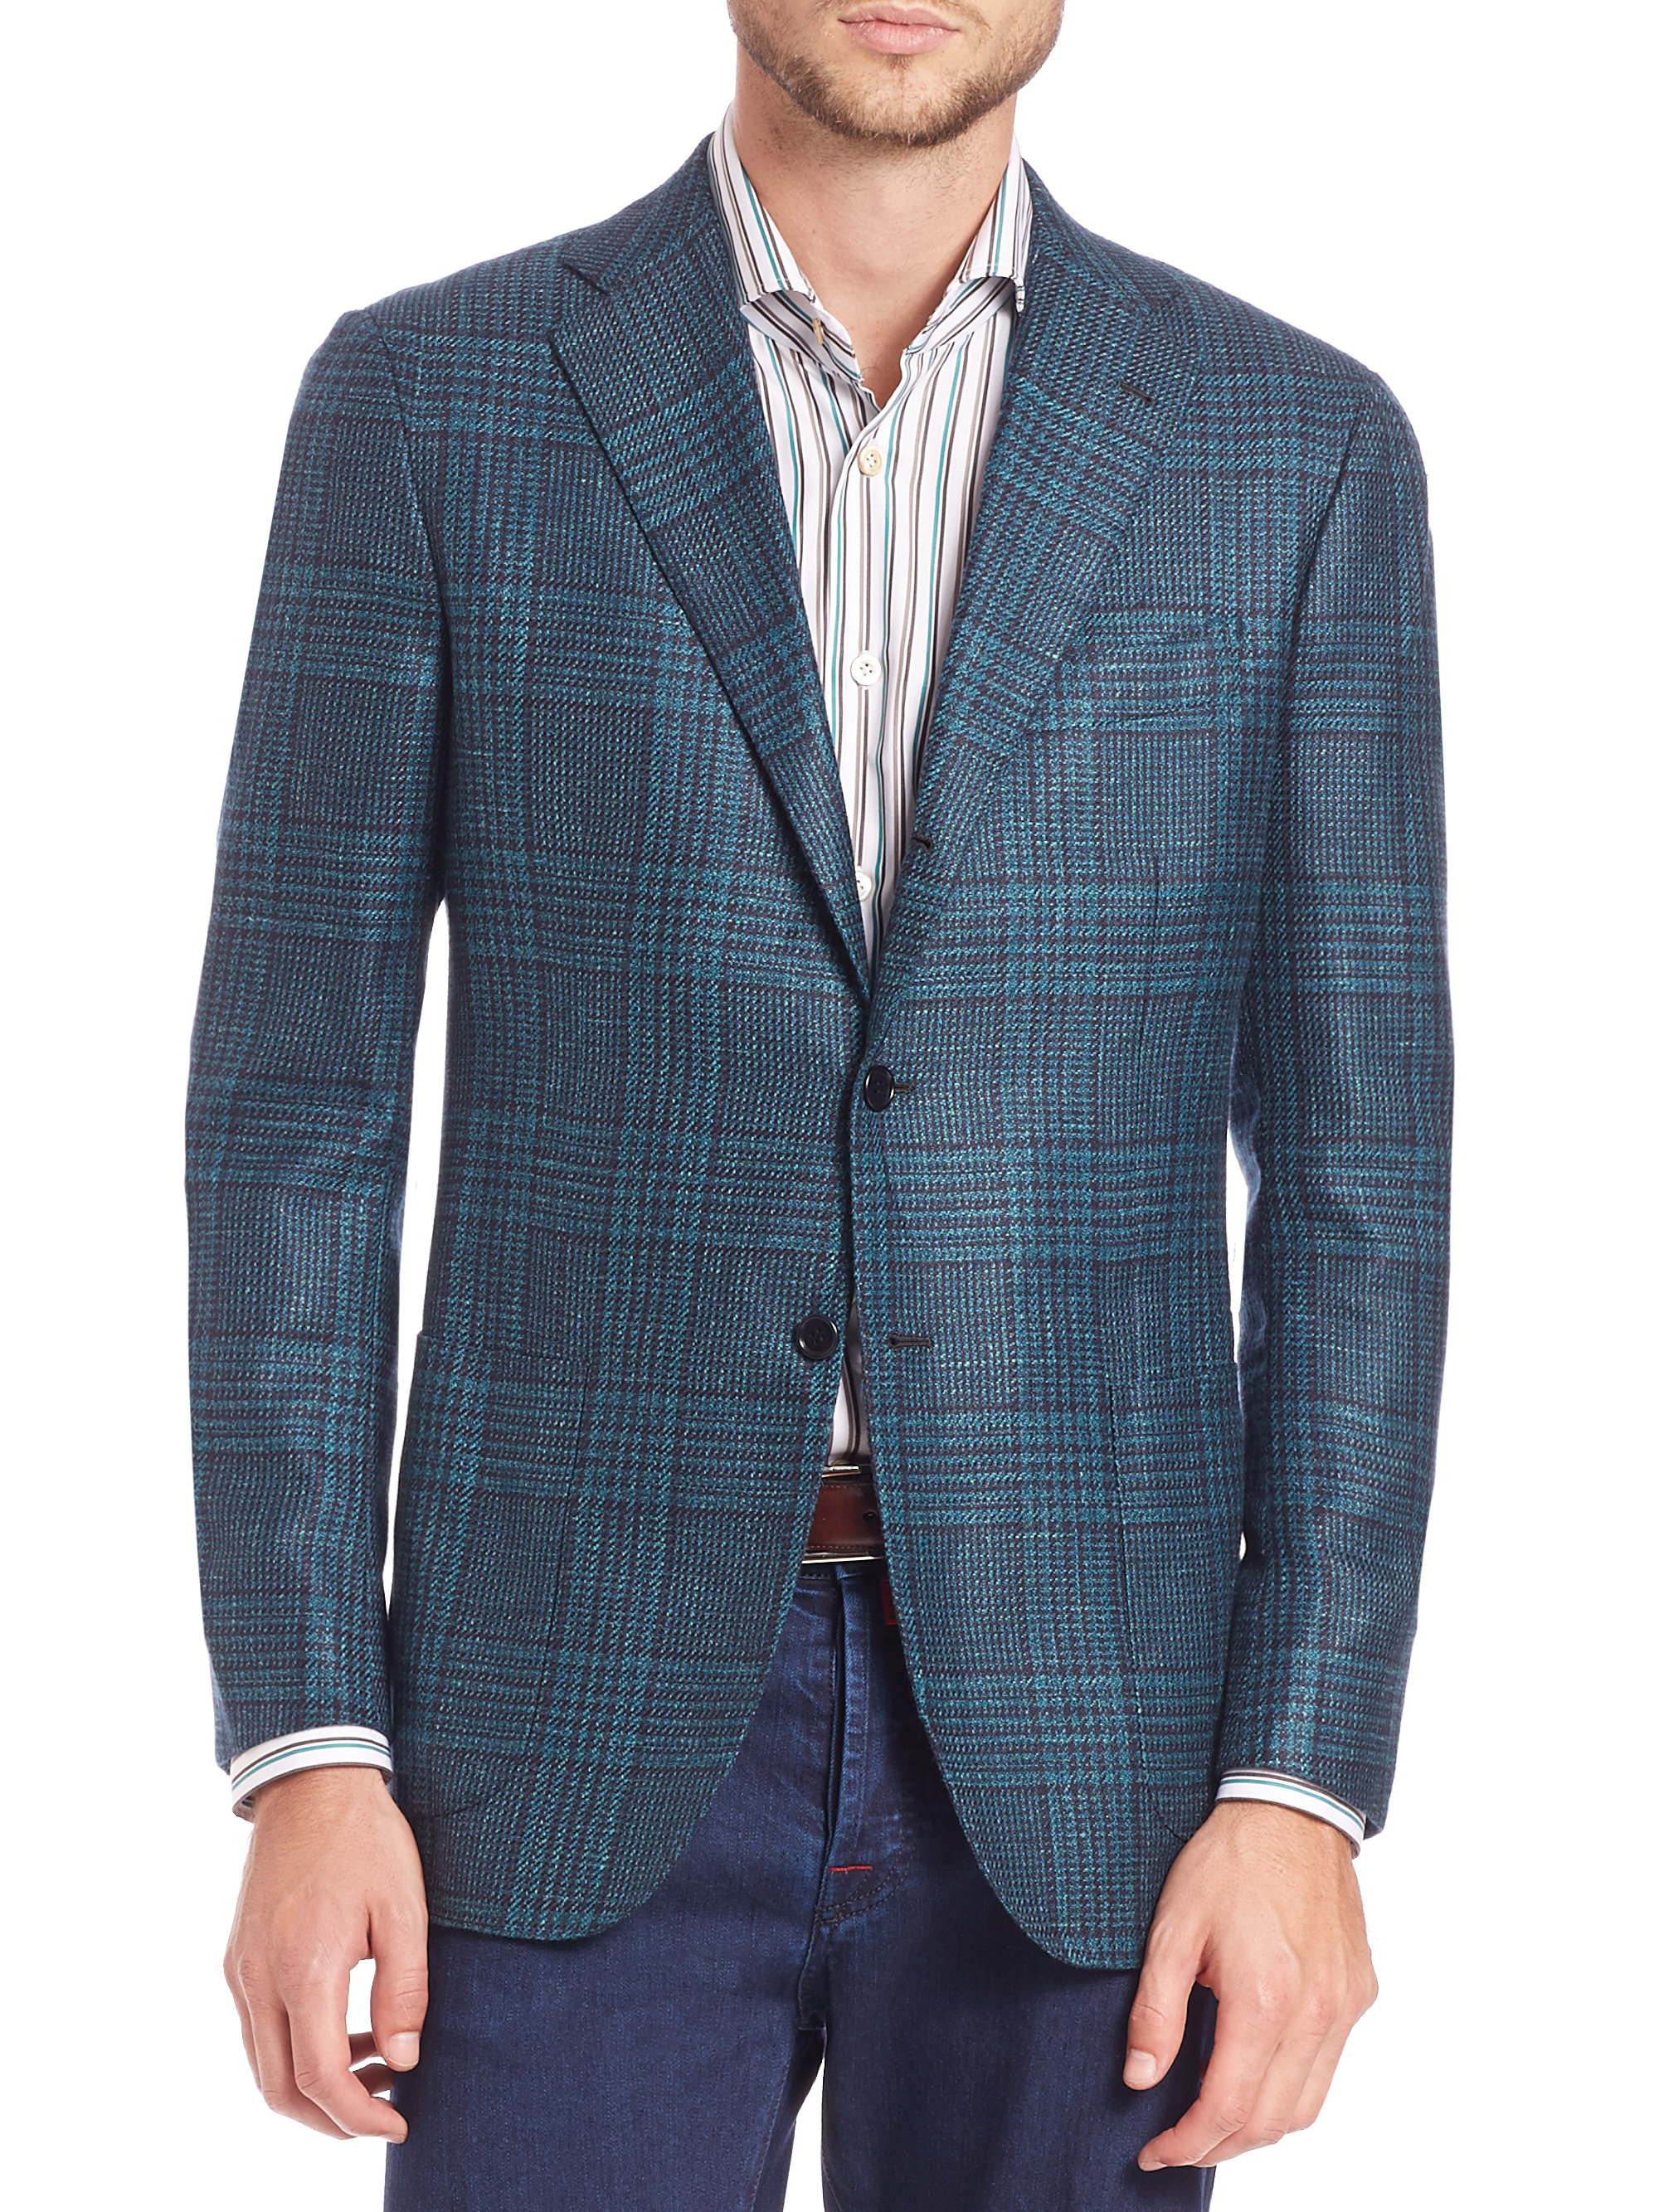 Lyst - Kiton Cashmere-blend Plaid Jacket in Blue for Men